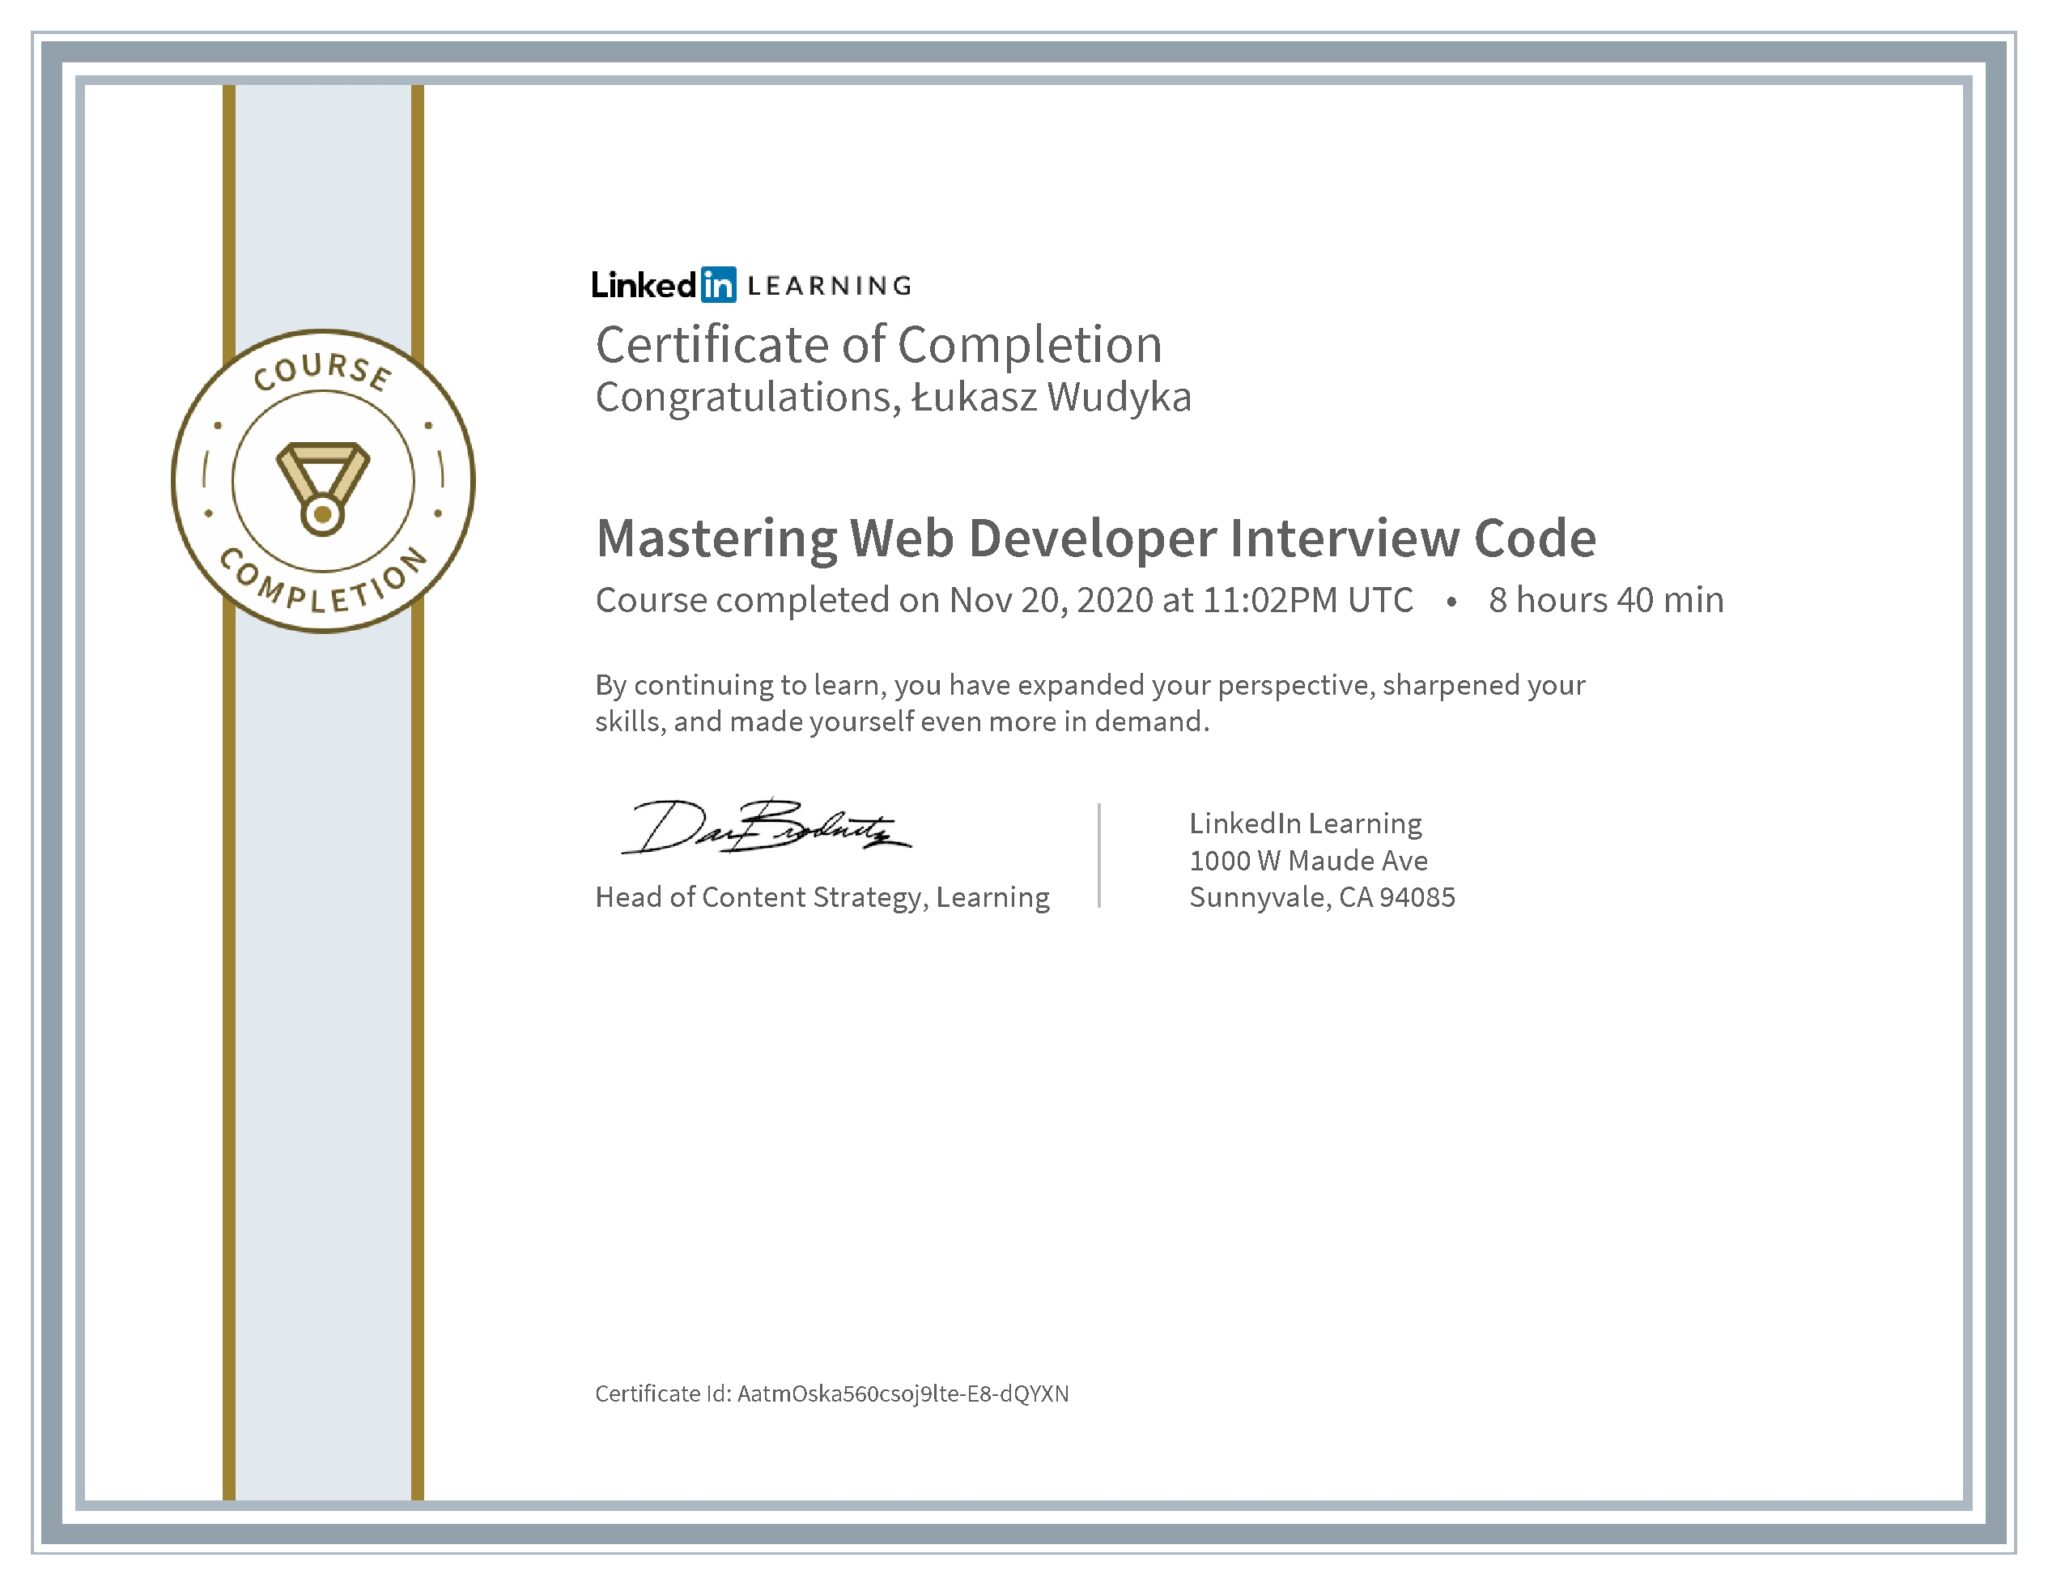 Łukasz Wudyka certyfikat LinkedIn Mastering Web Developer Interview Code